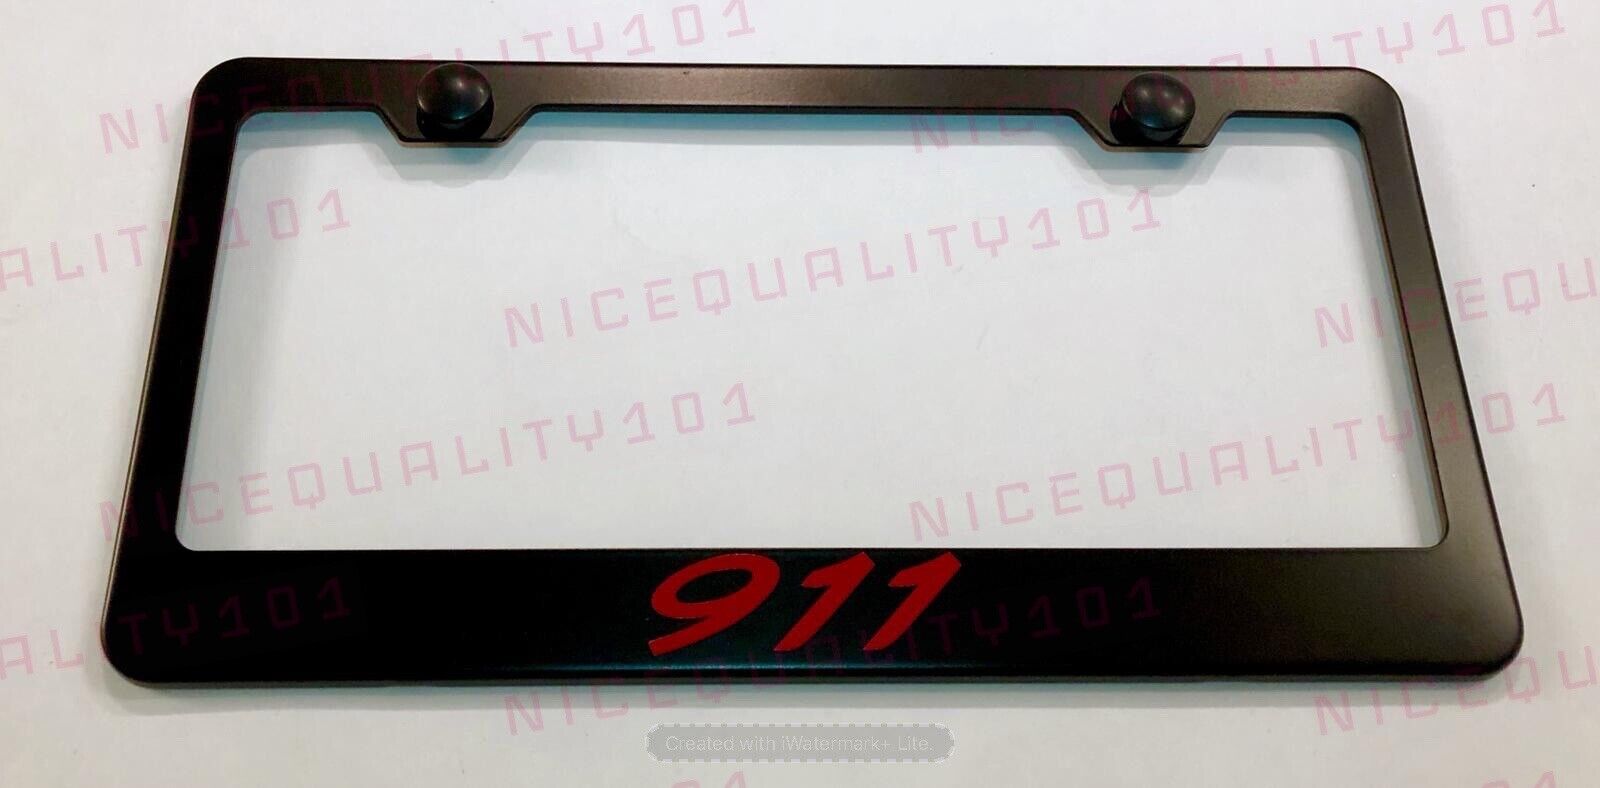 911 Stainless Steel Black Finished License Plate Frame Holder